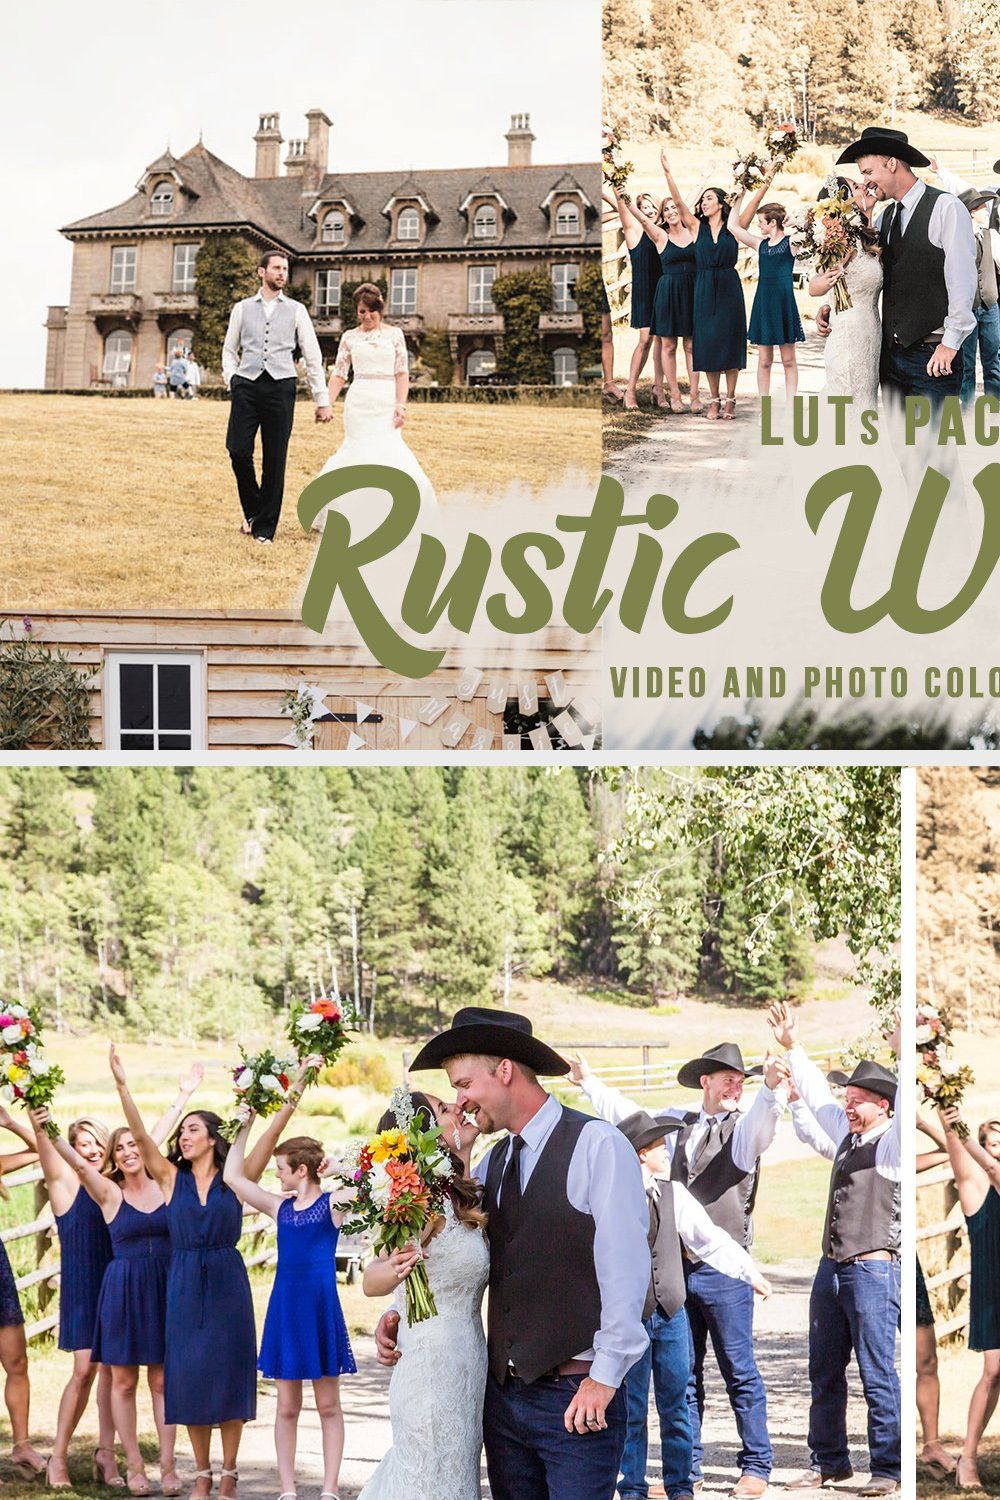 Rustic Wedding | 11 LUTs Bundle pinterest preview image.